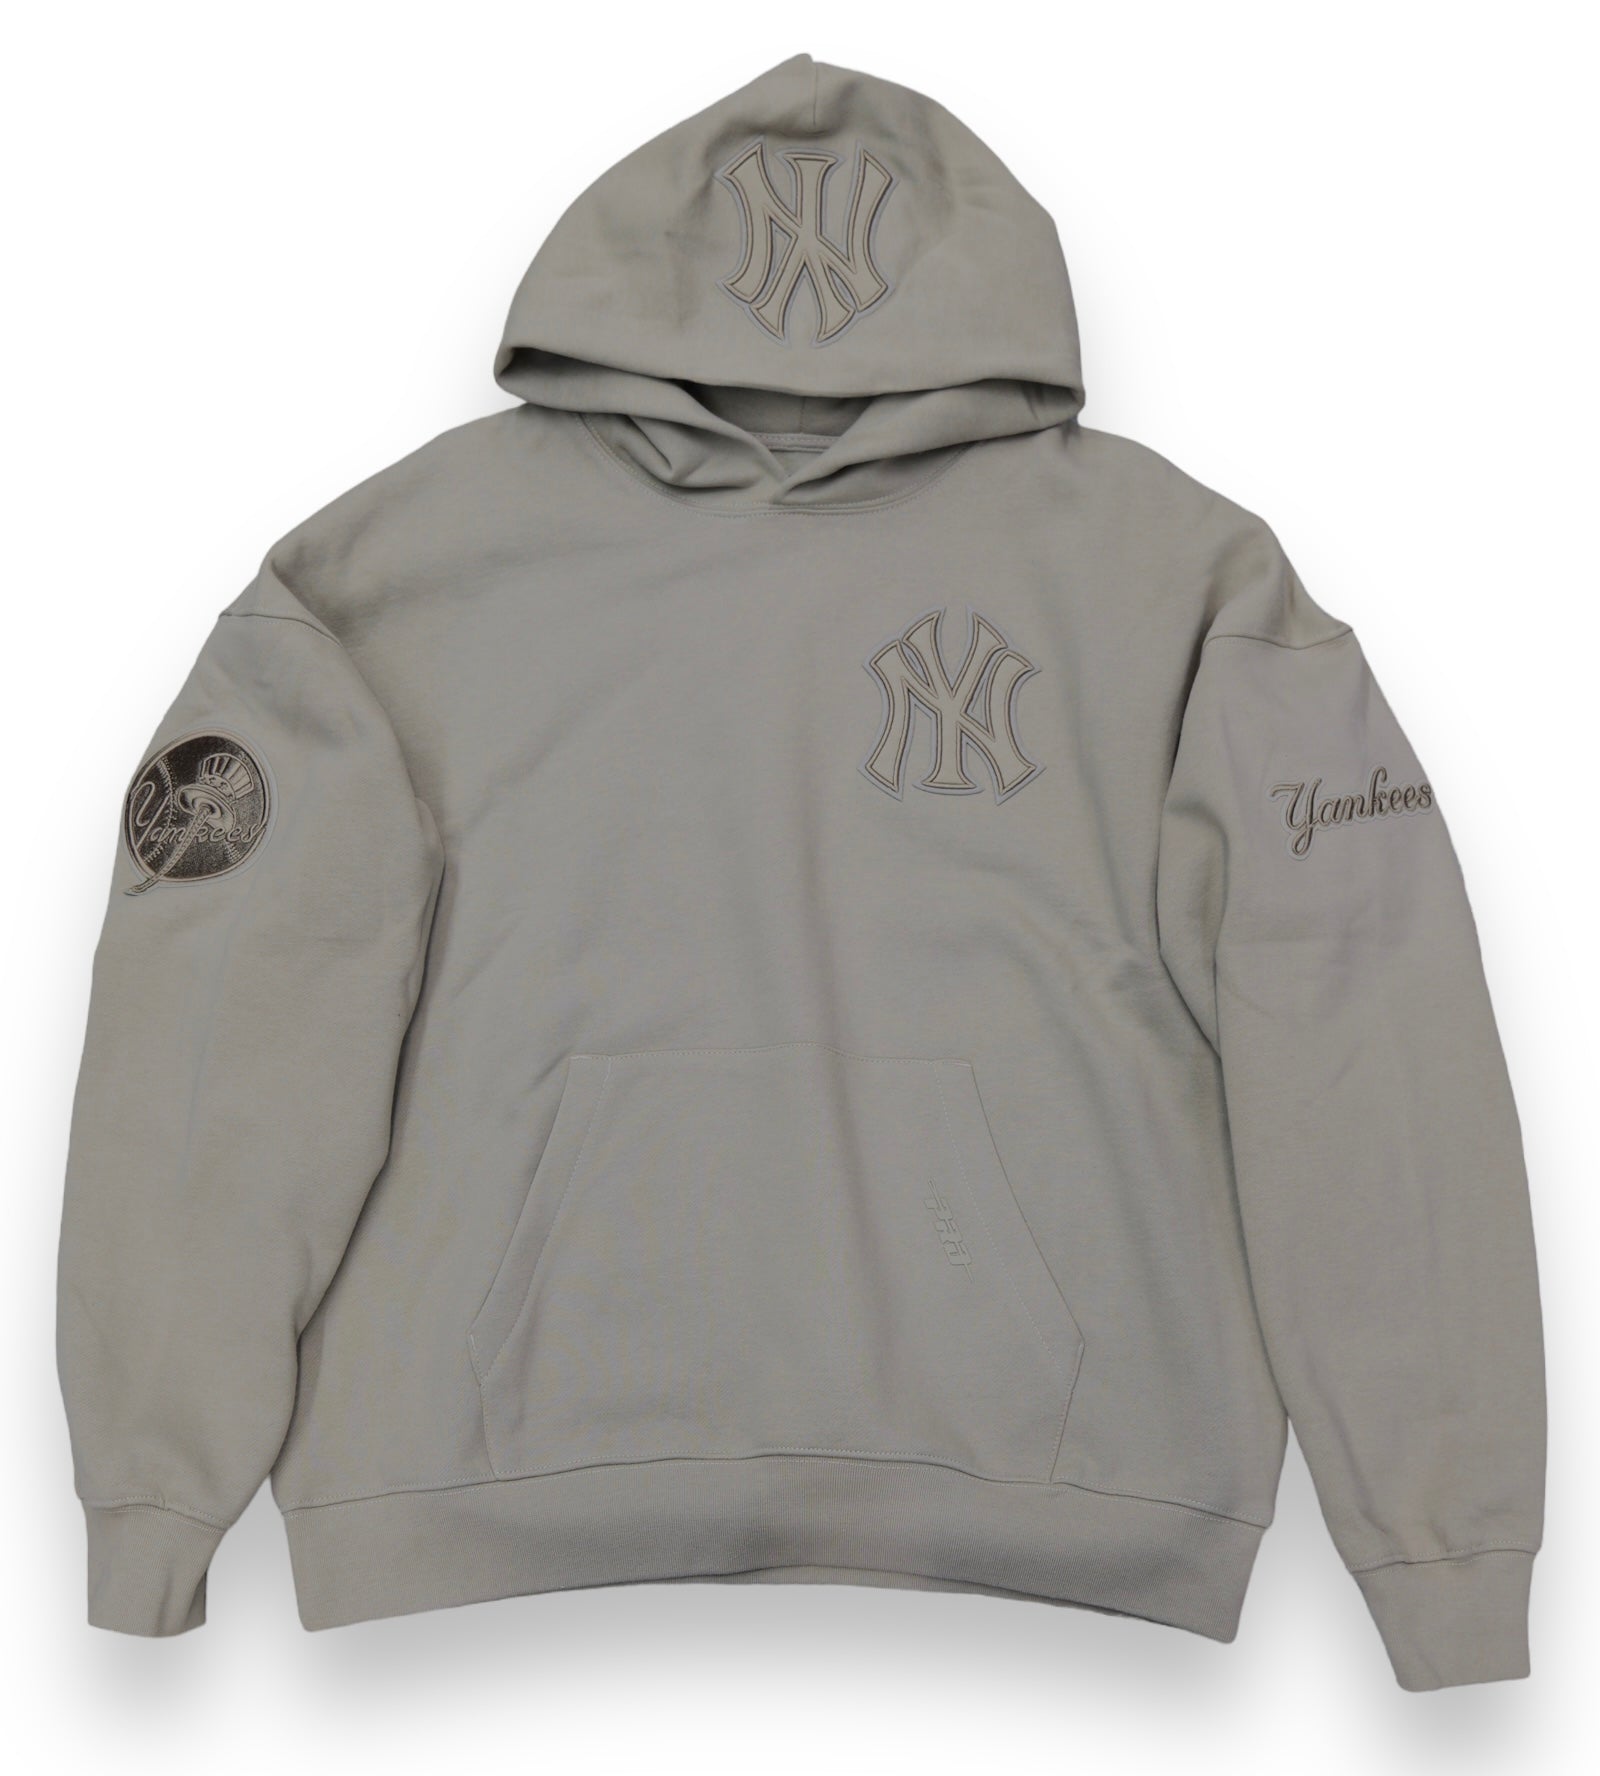 Pro Standard New York Yankees Sweatsuit (Taupe)